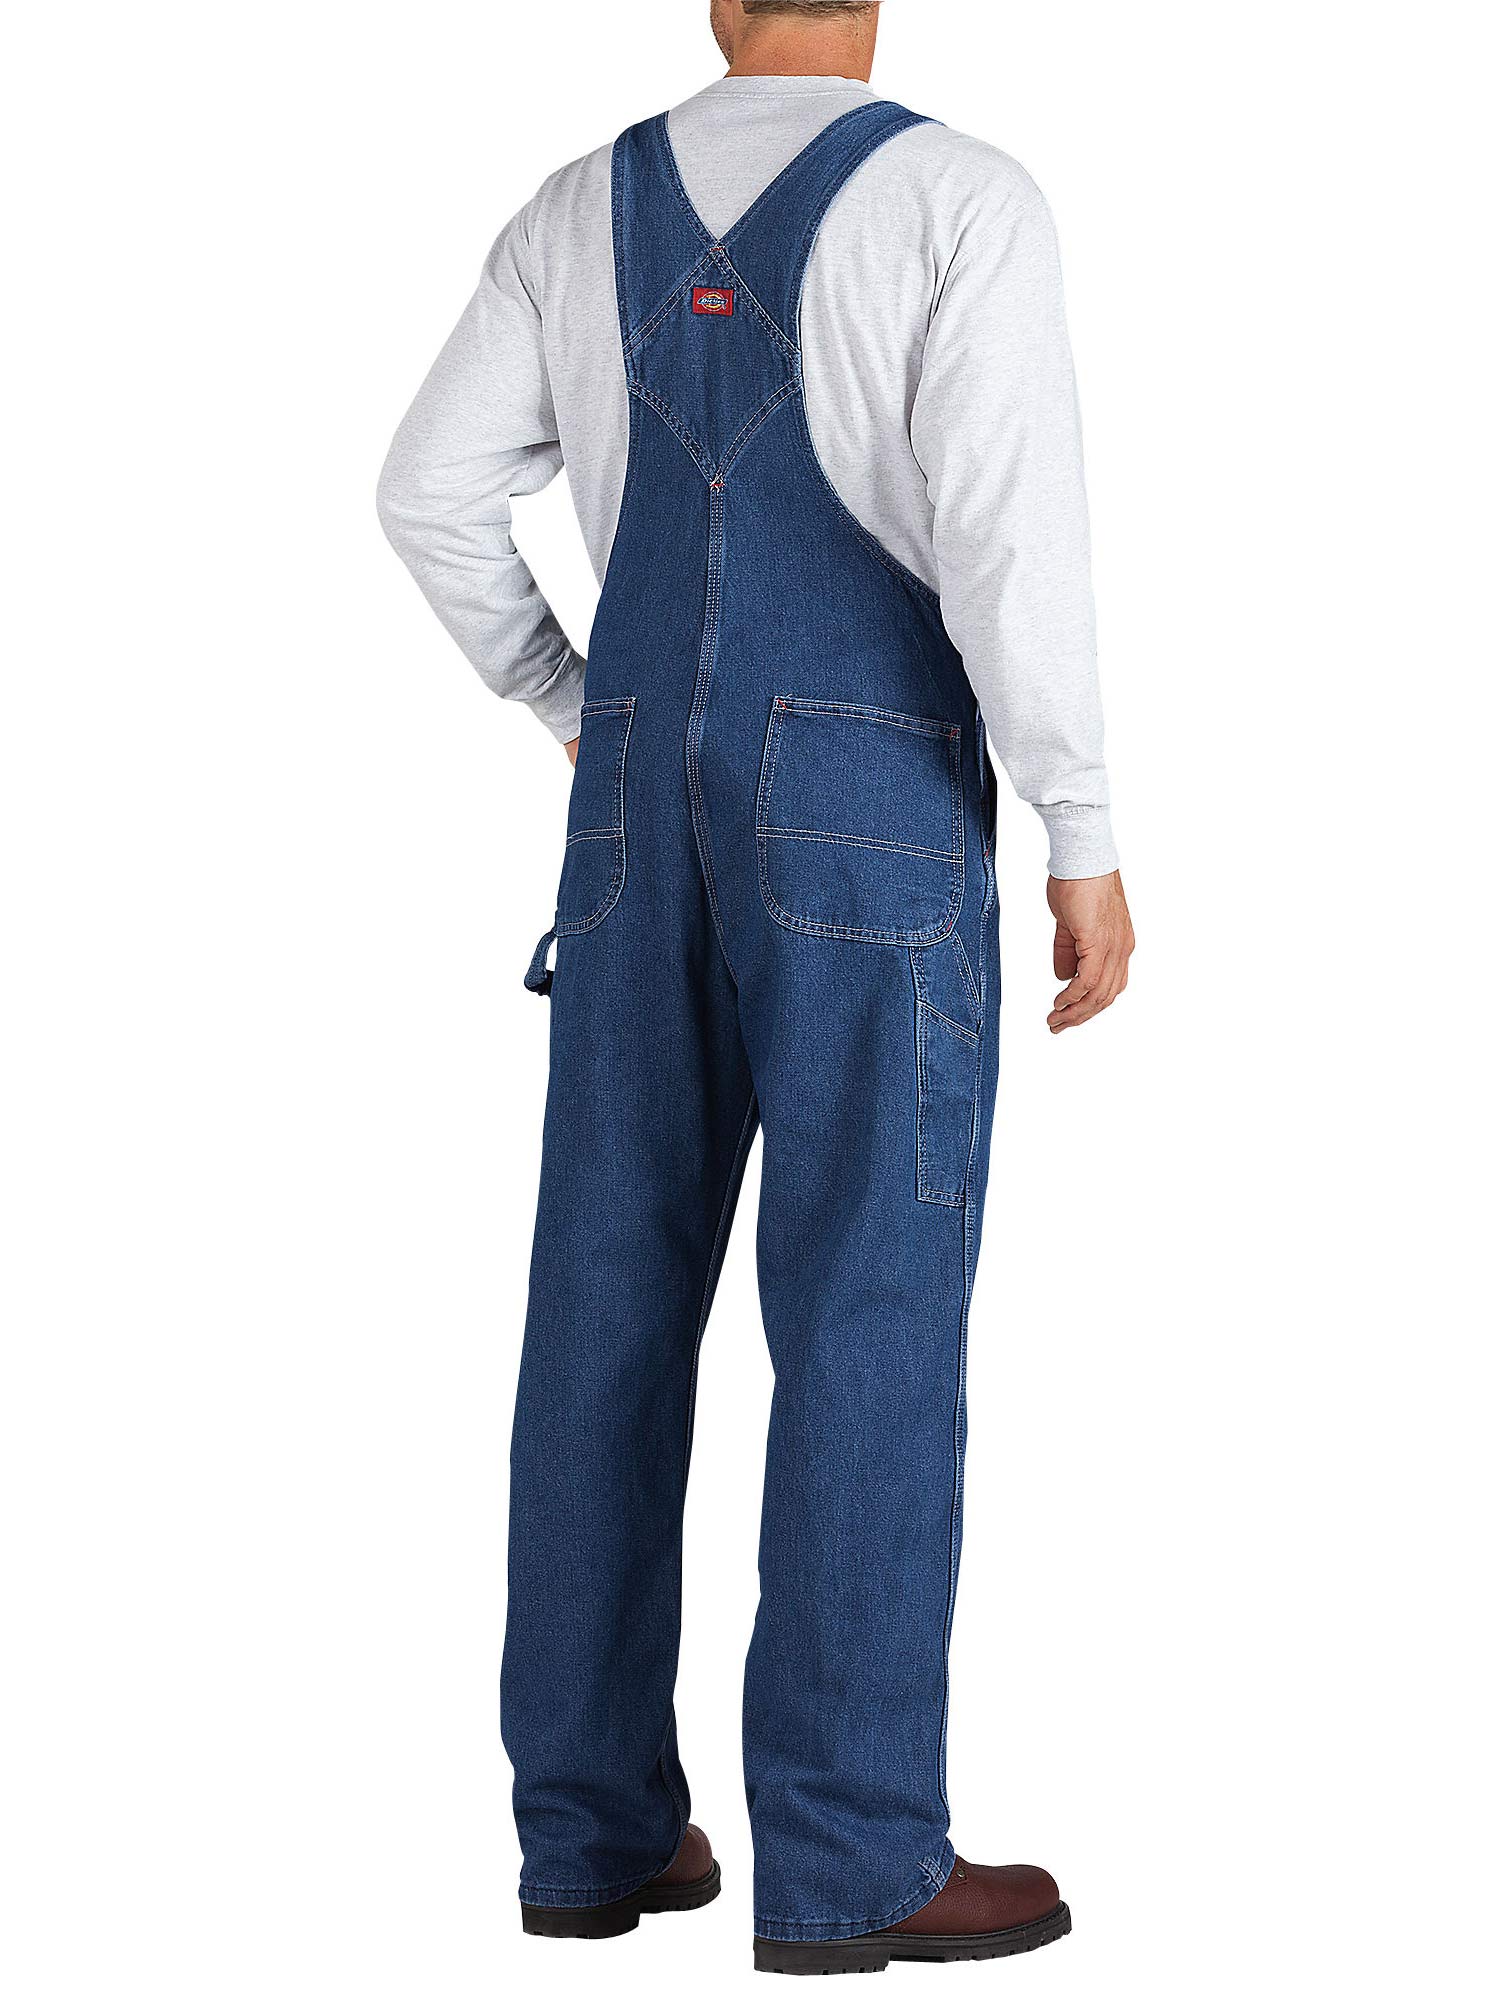 Dickies Men's Coverall Bib Overall Workwear Cotton Denim Adjustable Strap  83294, Indigo Blue, 30X30